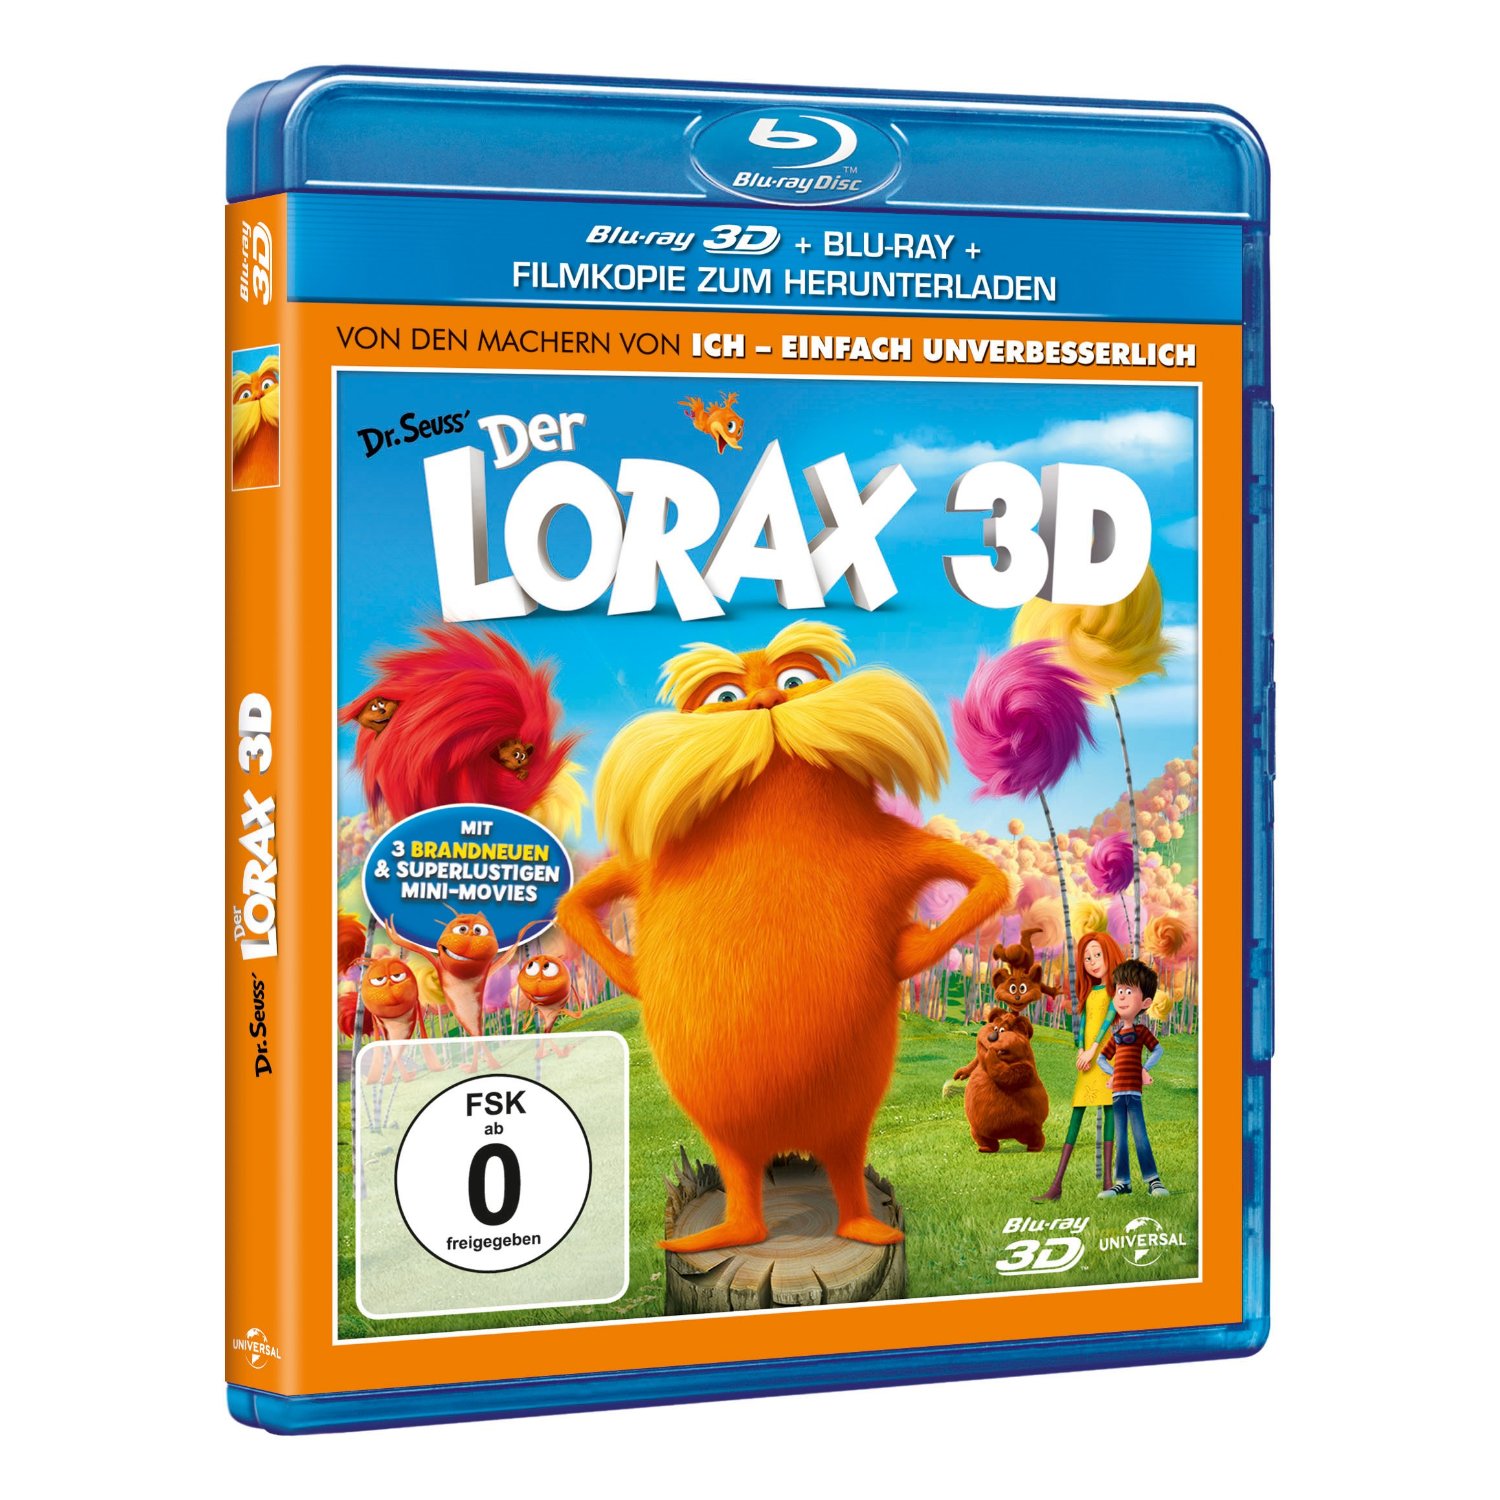 [AMAZON] Tipp! Der Lorax 3D (+ Blu-ray 3D + Digital Copy) [Blu-ray] für nur 9,97 Euro inkl. Versand